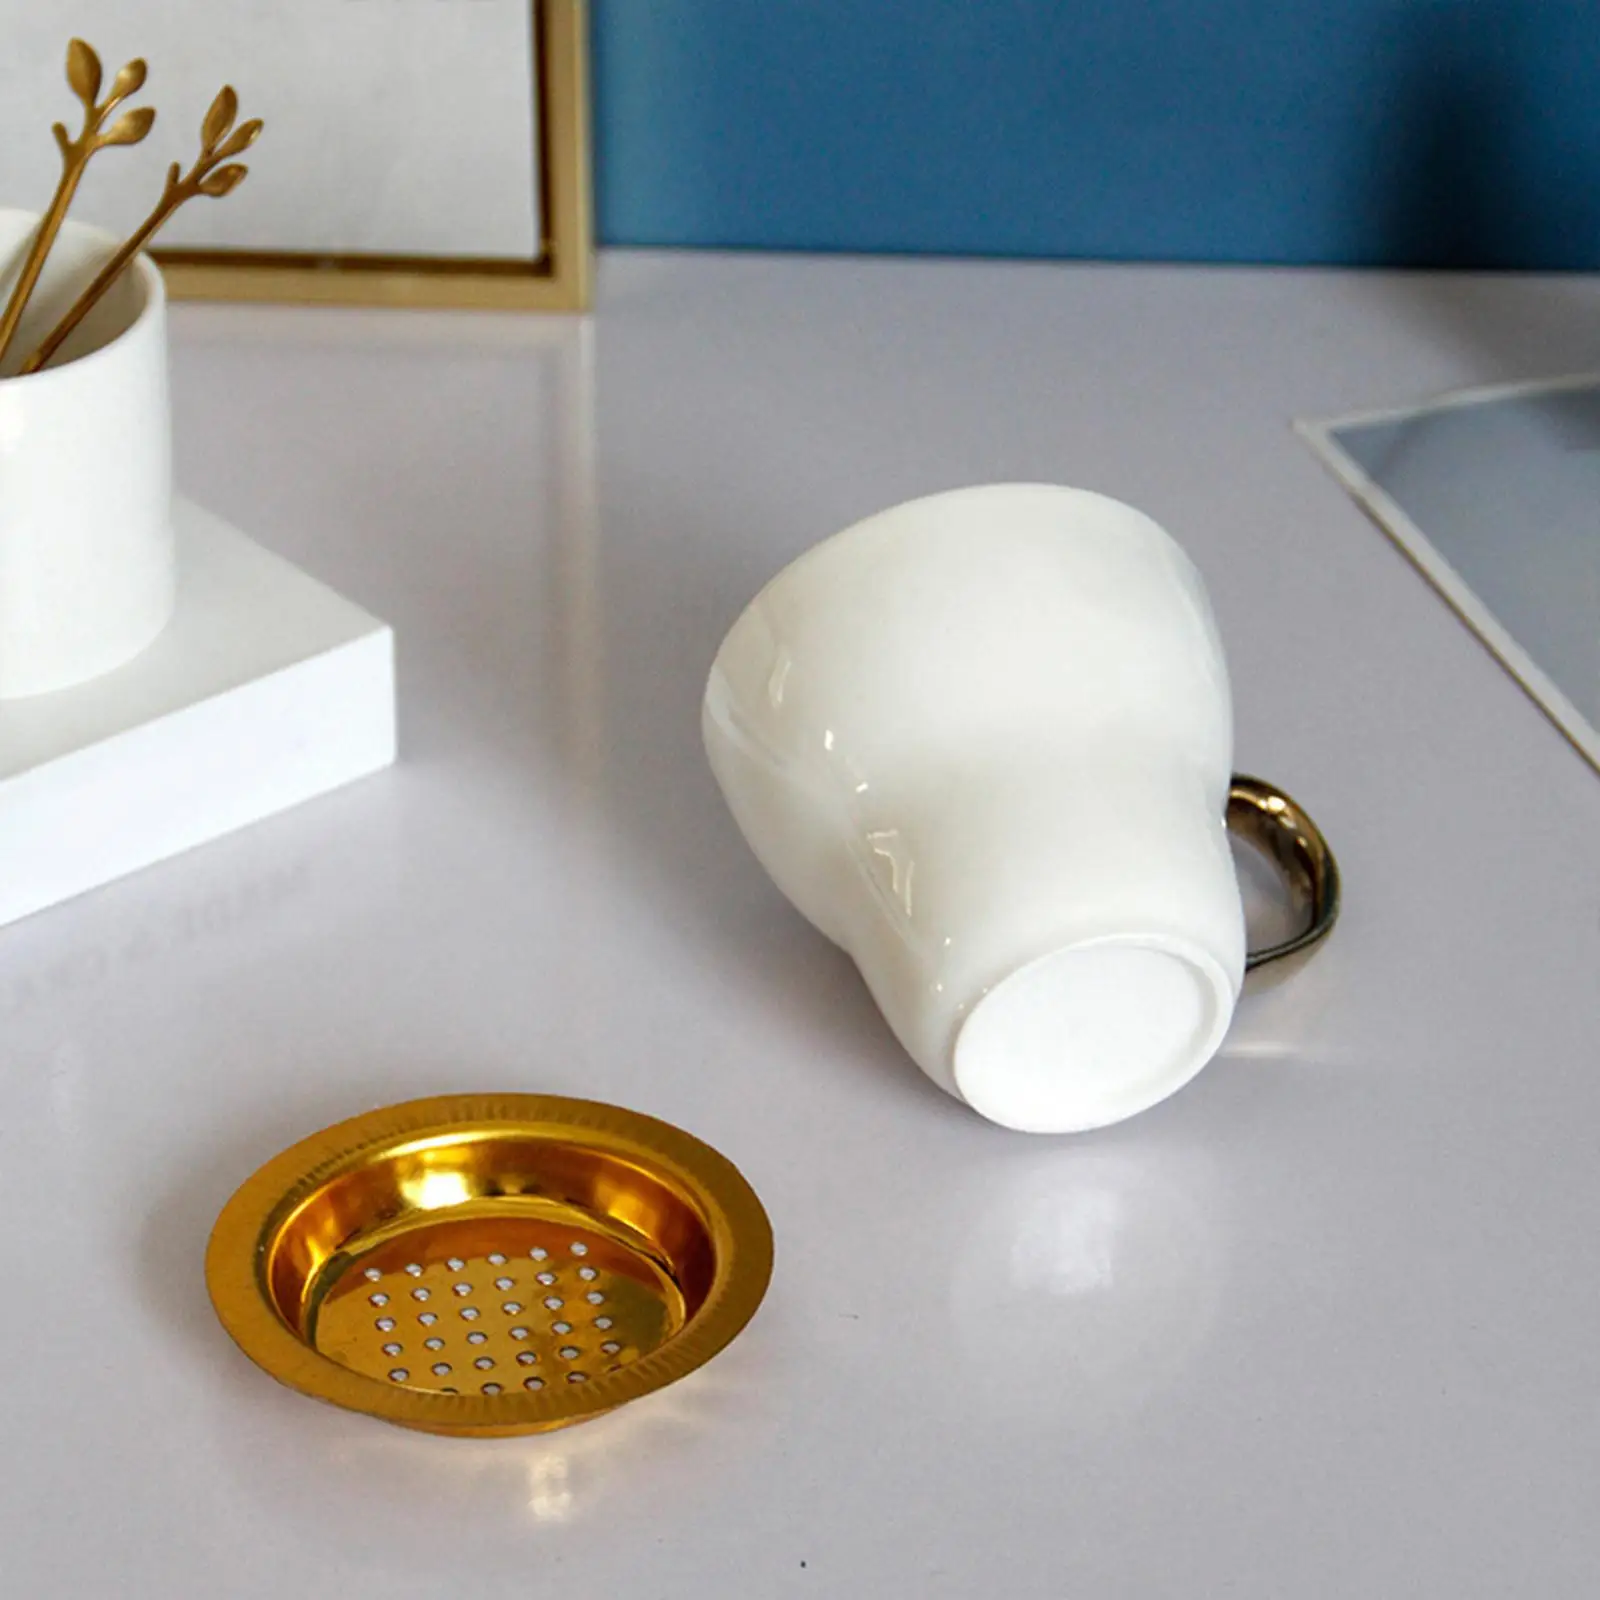 Ceramic Incense Burner with Detachable Ash Cup for Buddha Desktop